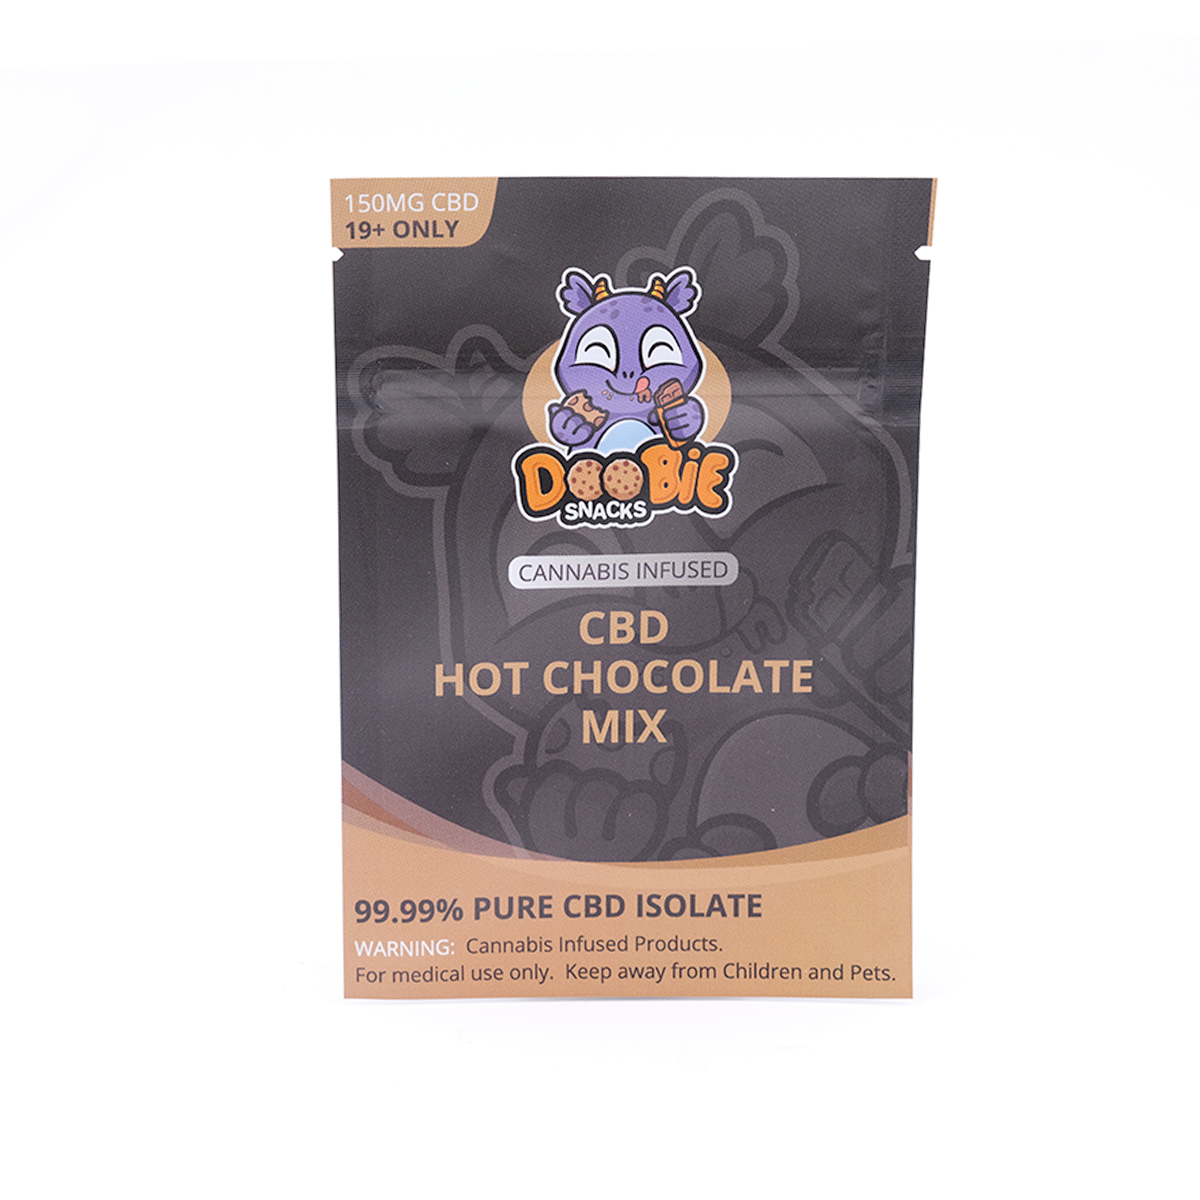 Doobie Snacks – 150mg CBD Crystal Mix – Hot Chocolate